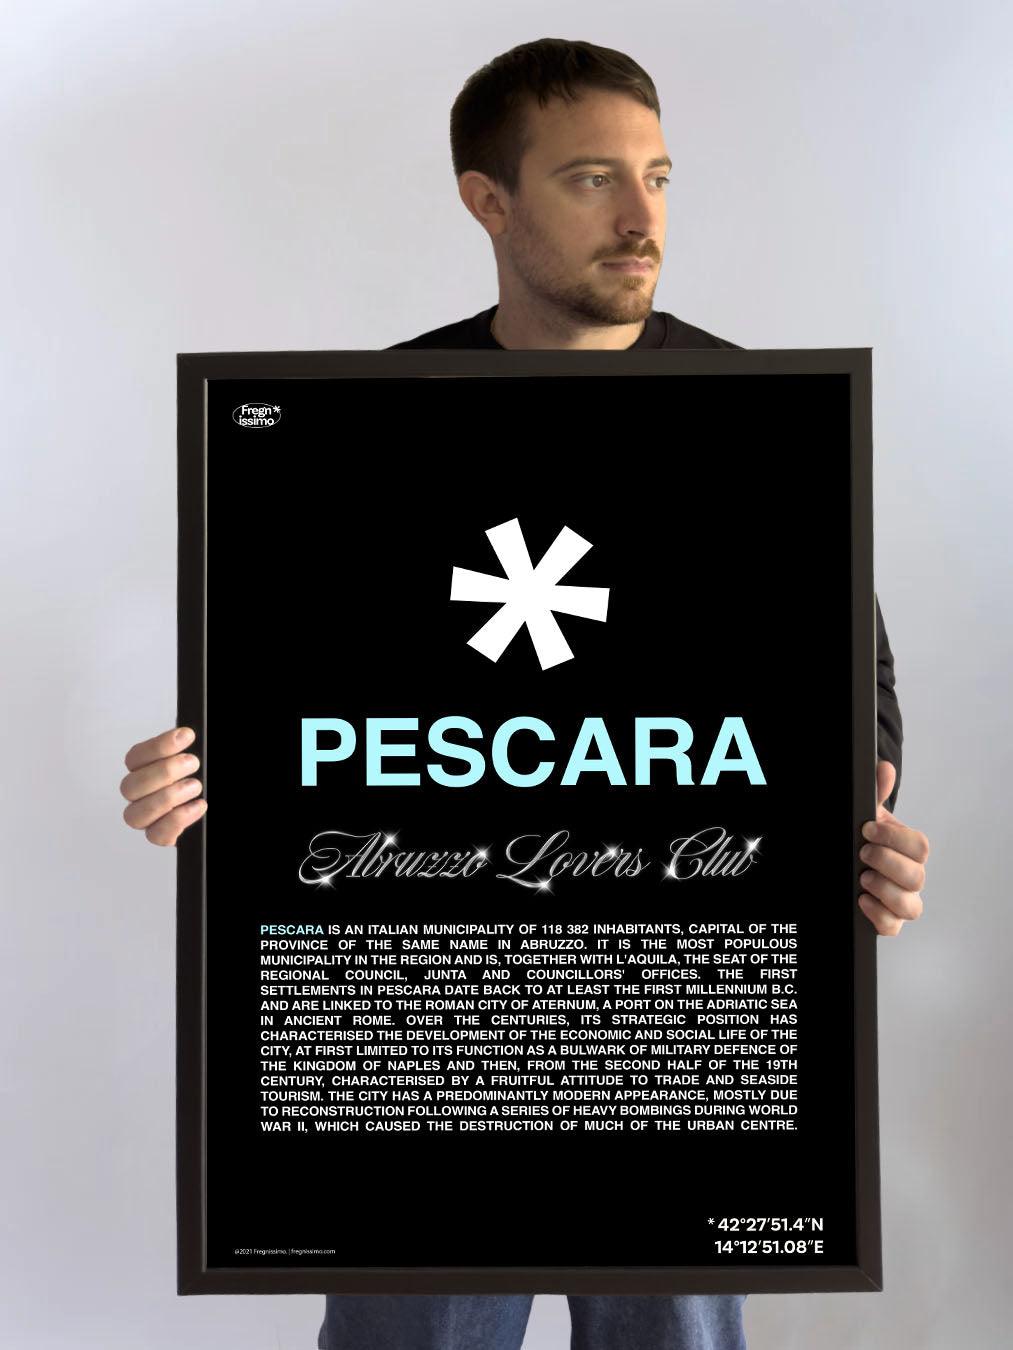 Poster 50x70cm - PESCARA - ABRUZZO LOVERS CLUB - Fregnissimo®